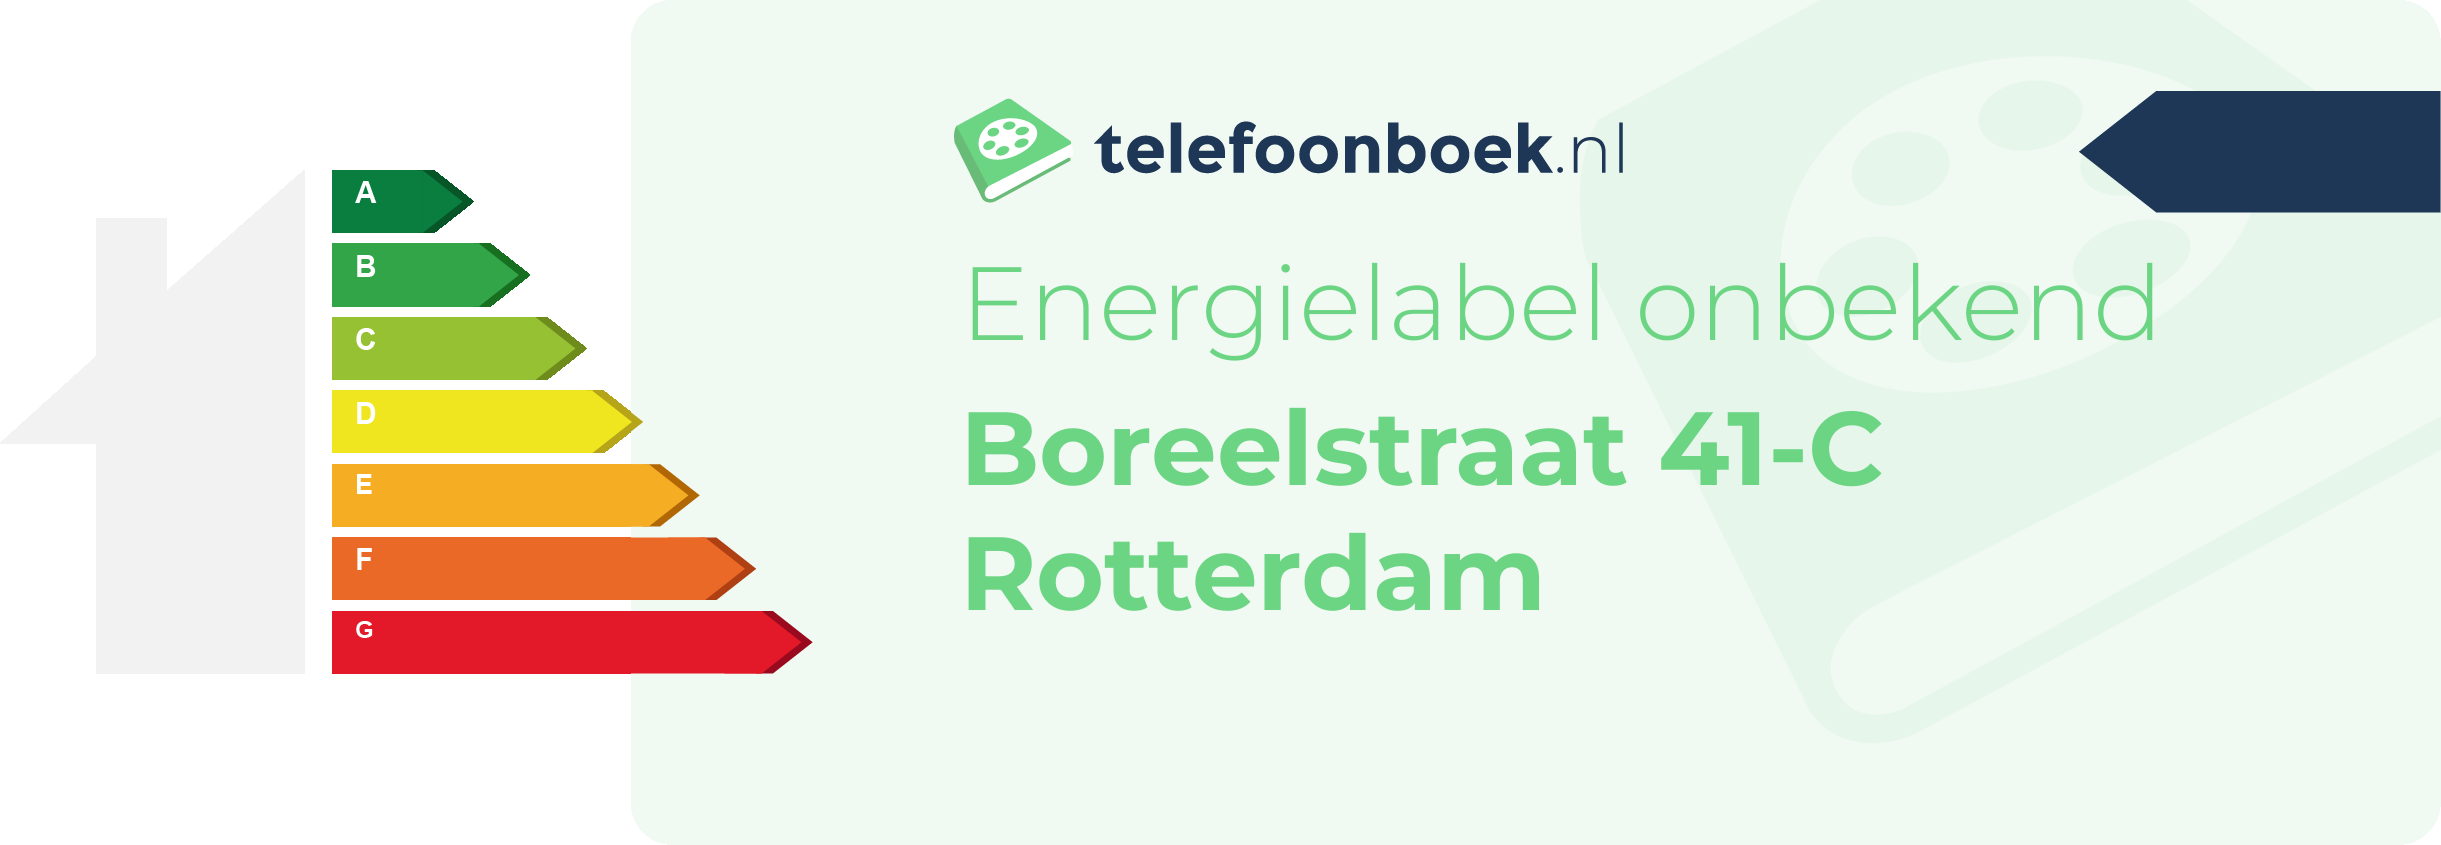 Energielabel Boreelstraat 41-C Rotterdam